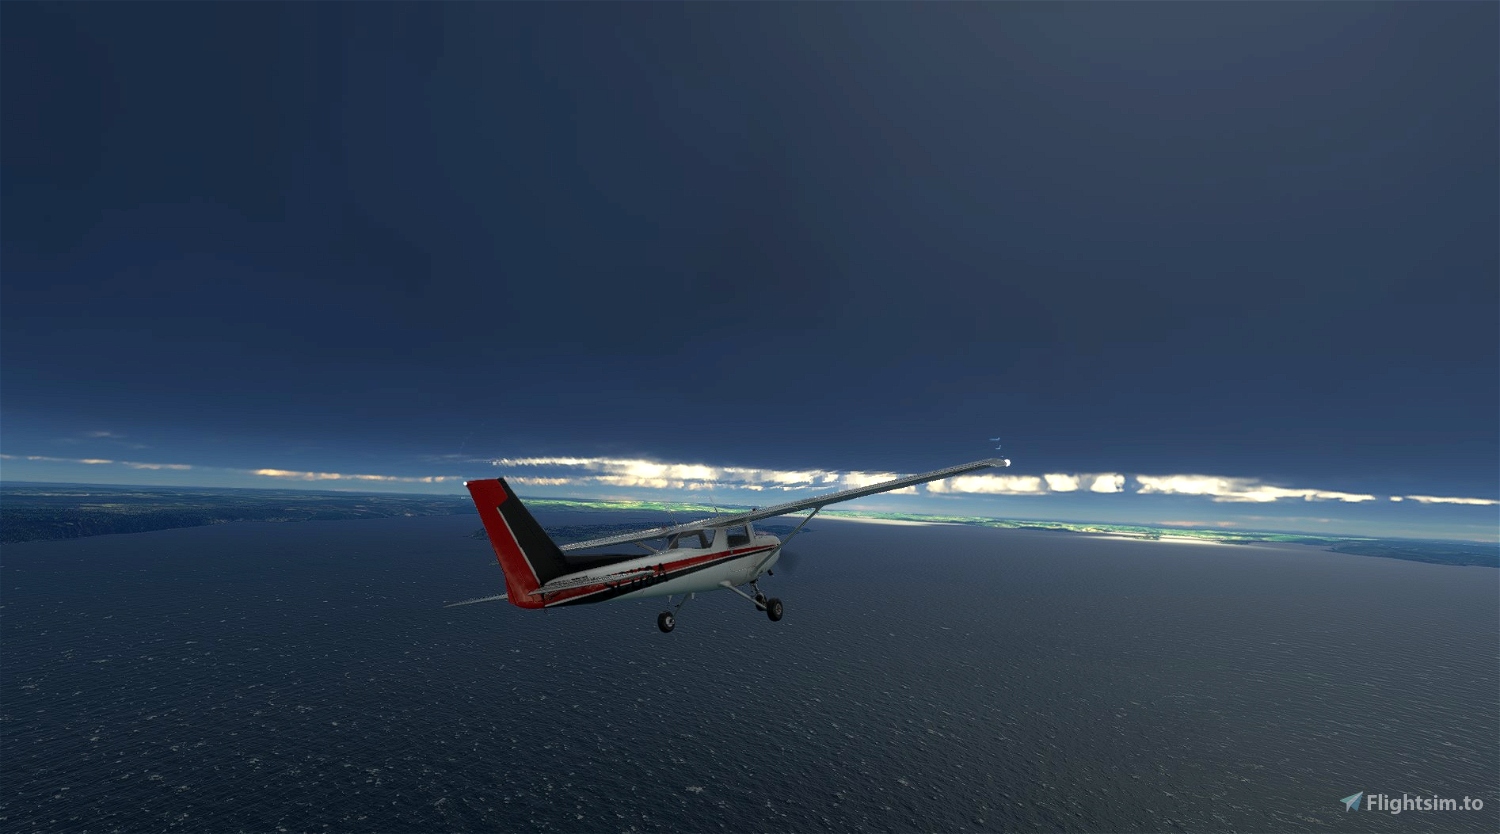 Microsoft Flight Simulator Overview - flight planning, landing challenges,  computer specs 